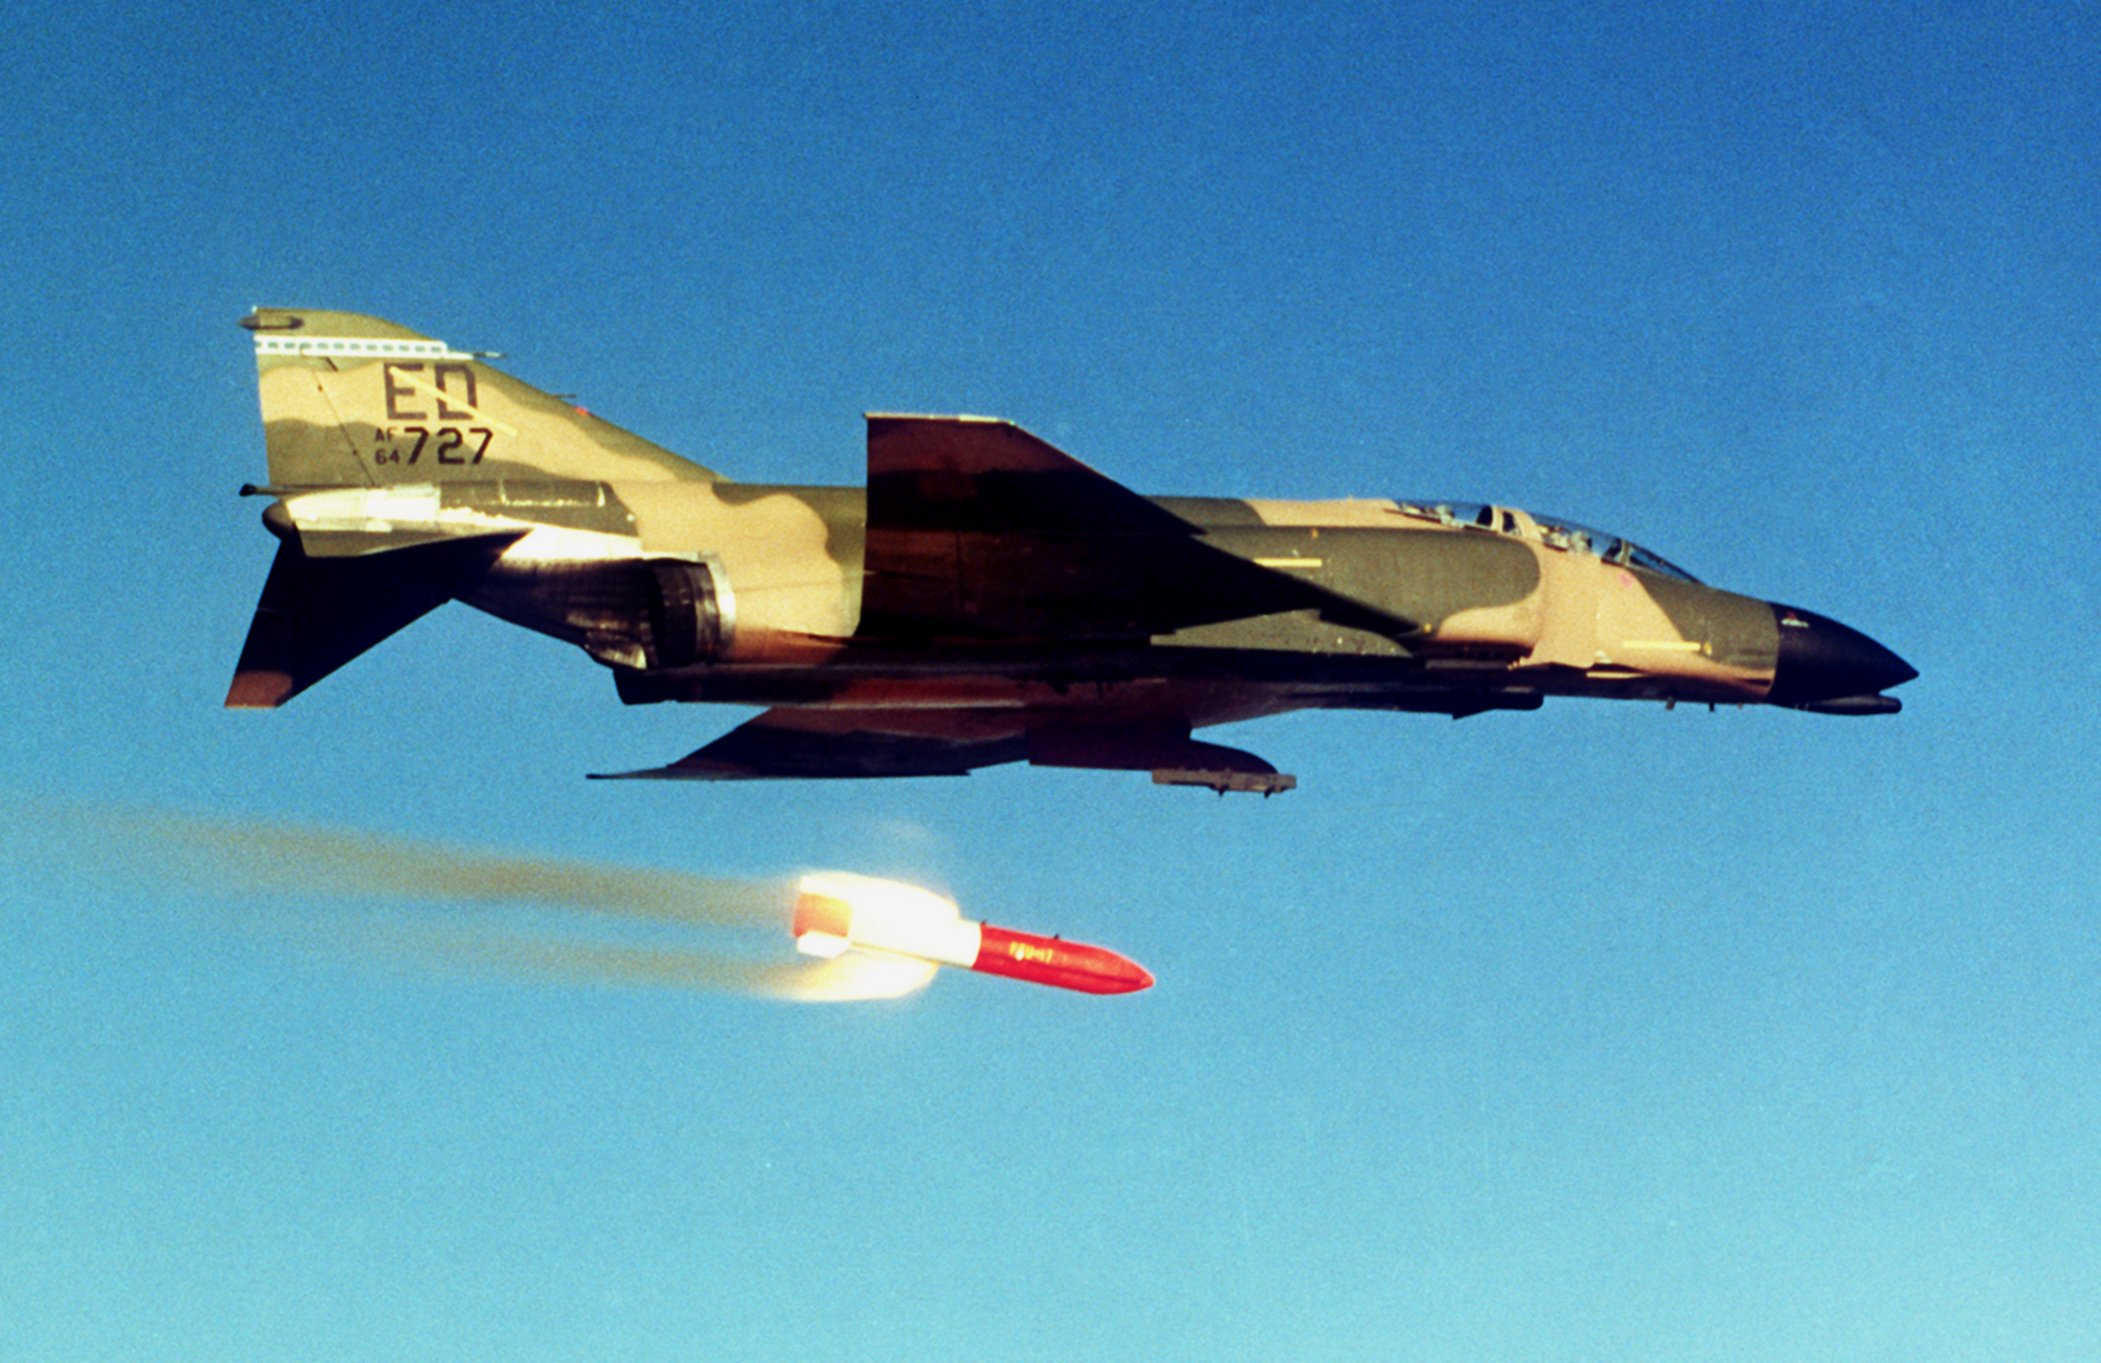 Prueba de bomba nuclear con el jet F-4 Phantom. Foto: Wikipedia Commons